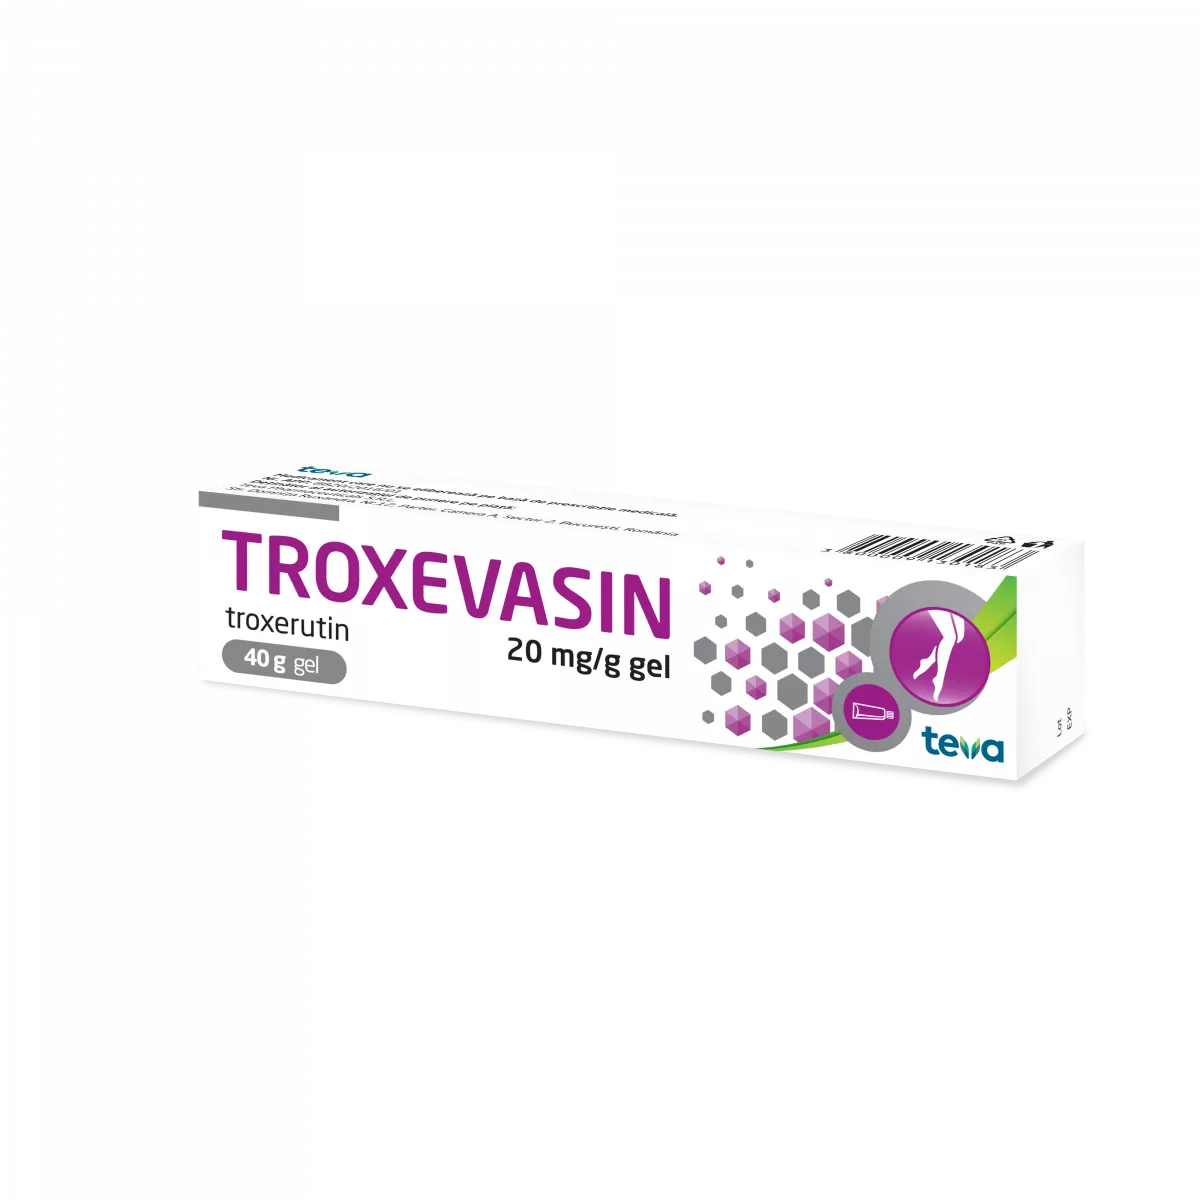 Troxevasin gel 2%, 40 mg, Actavis